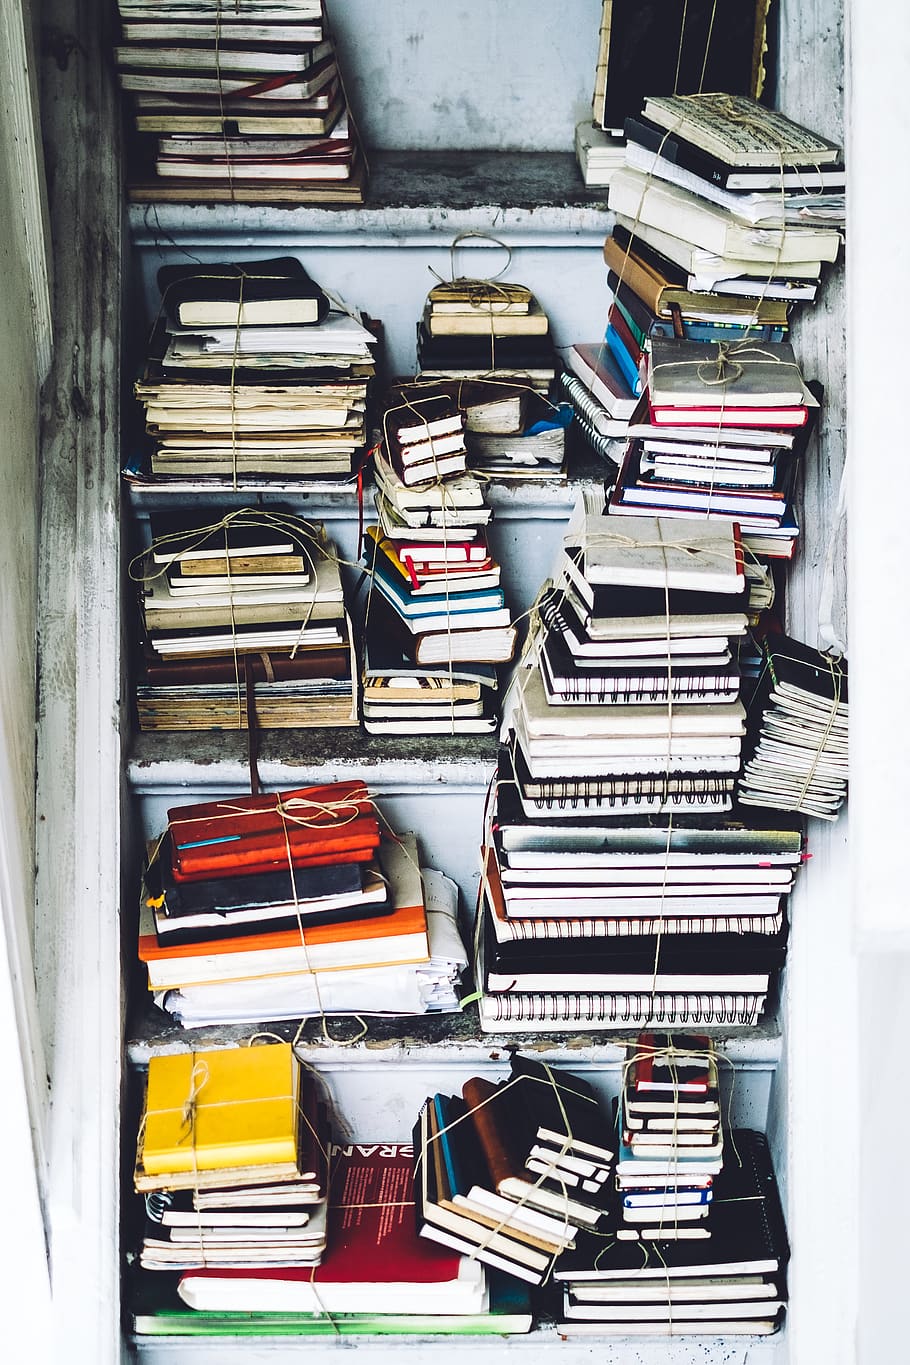 buku catatan, buku, baca, tulis, buku harian, penyimpanan, lemari, sekelompok besar objek, tumpukan, Book